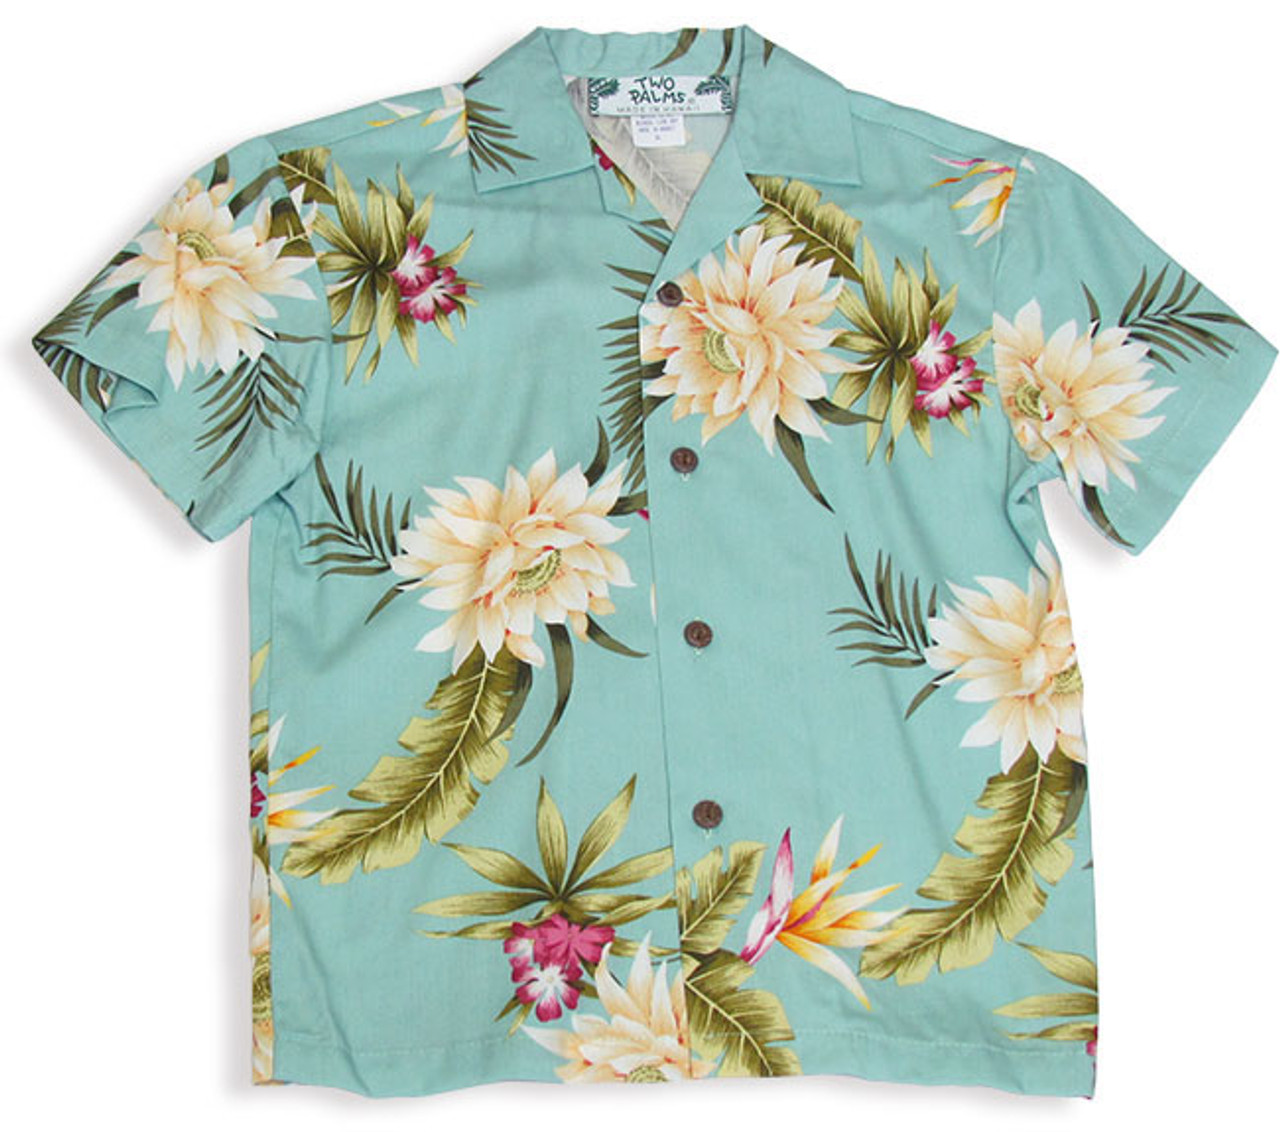 Full Funk Childrens Hawaiian Shirt in Summer Printed Rayon Seaside Beach Fun 